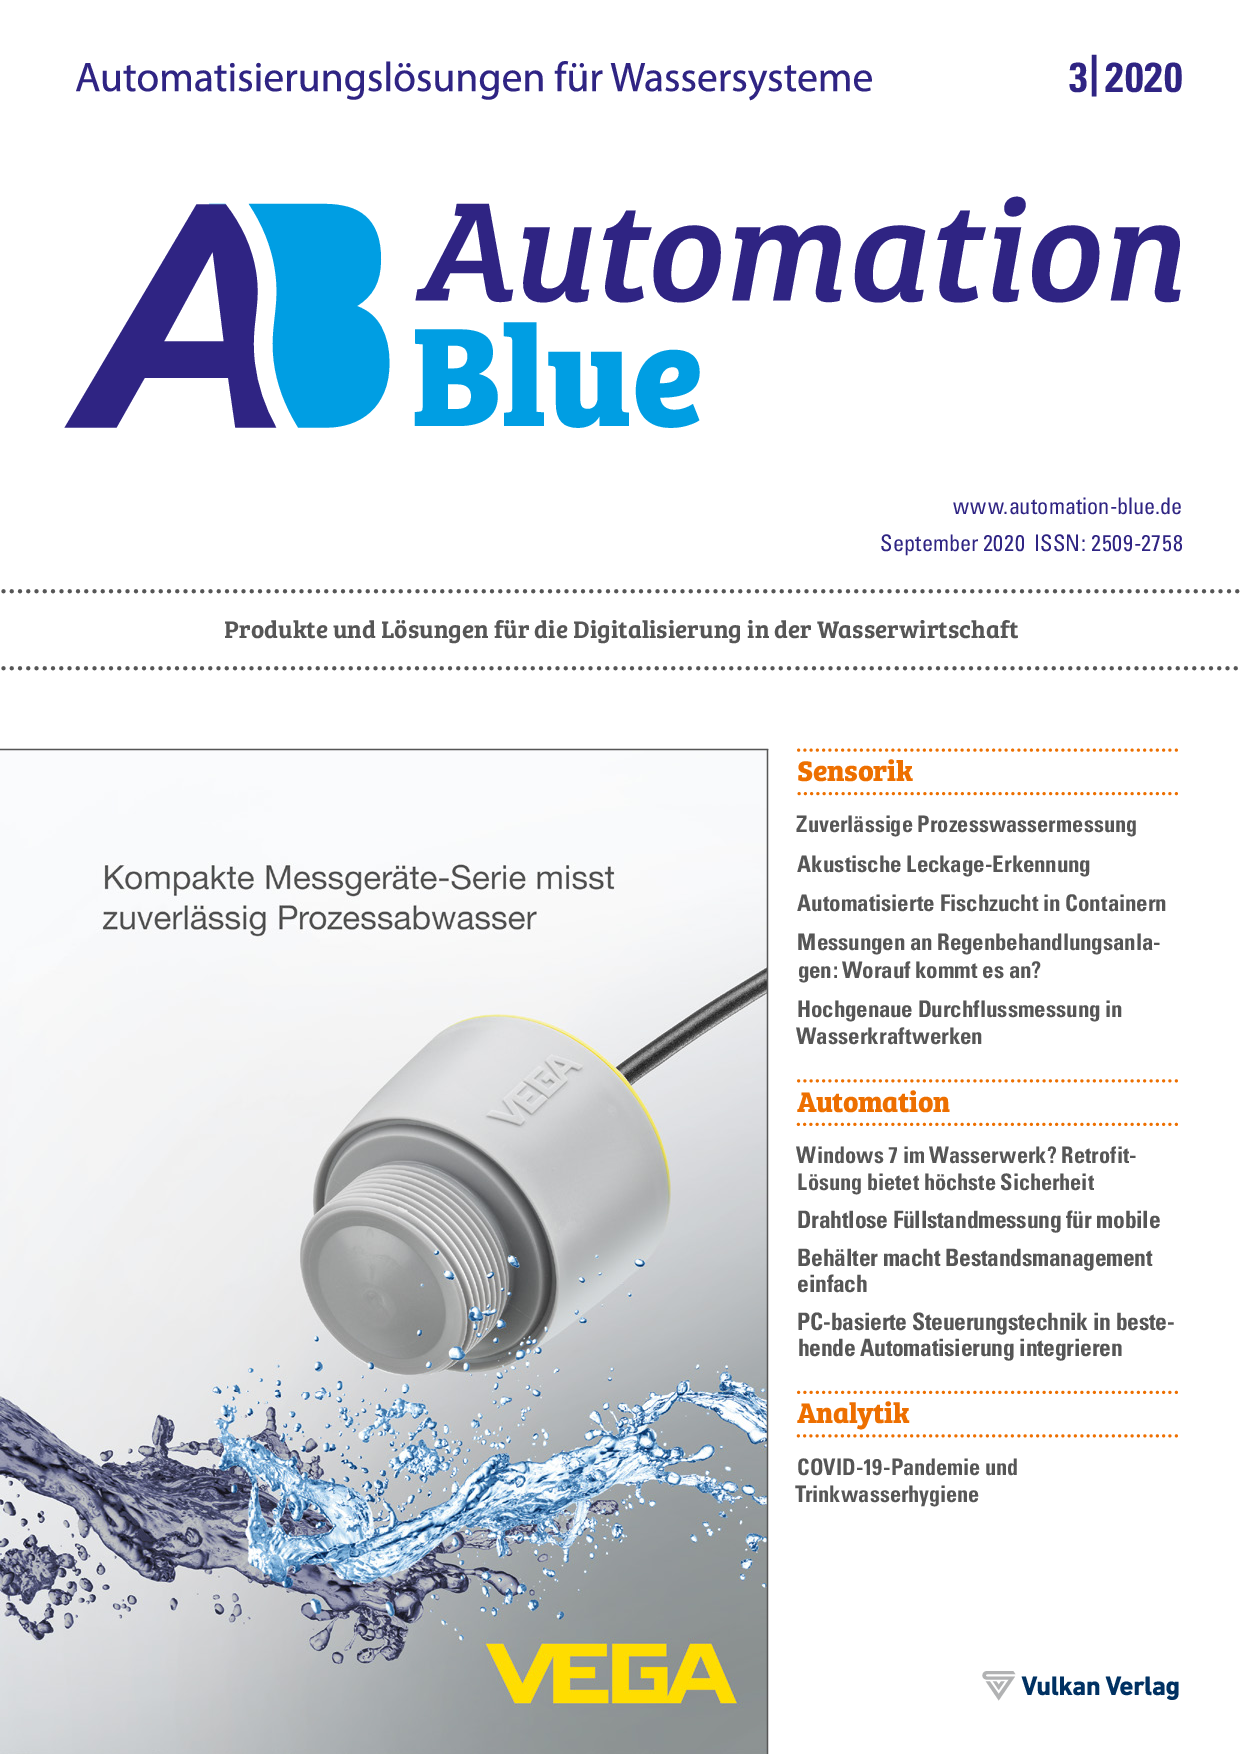 Automation Blue - 03 2020